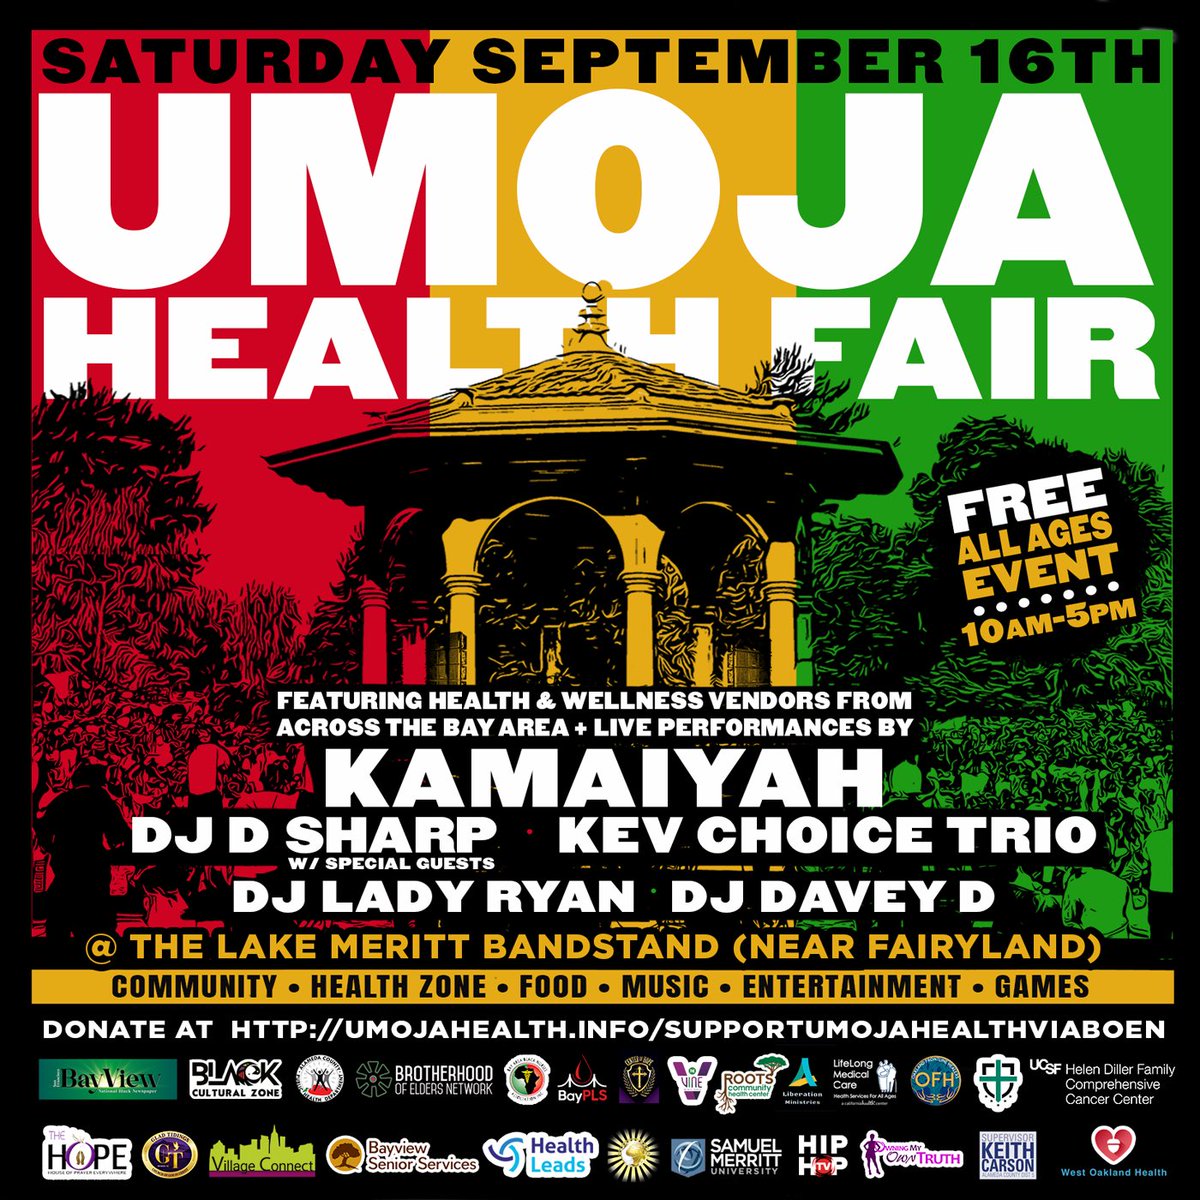 JOIN US Saturday, Sept. 16th as we celebrate our 3rd annual UMOJA HEALTH FAIR @ Lake Merritt. Free